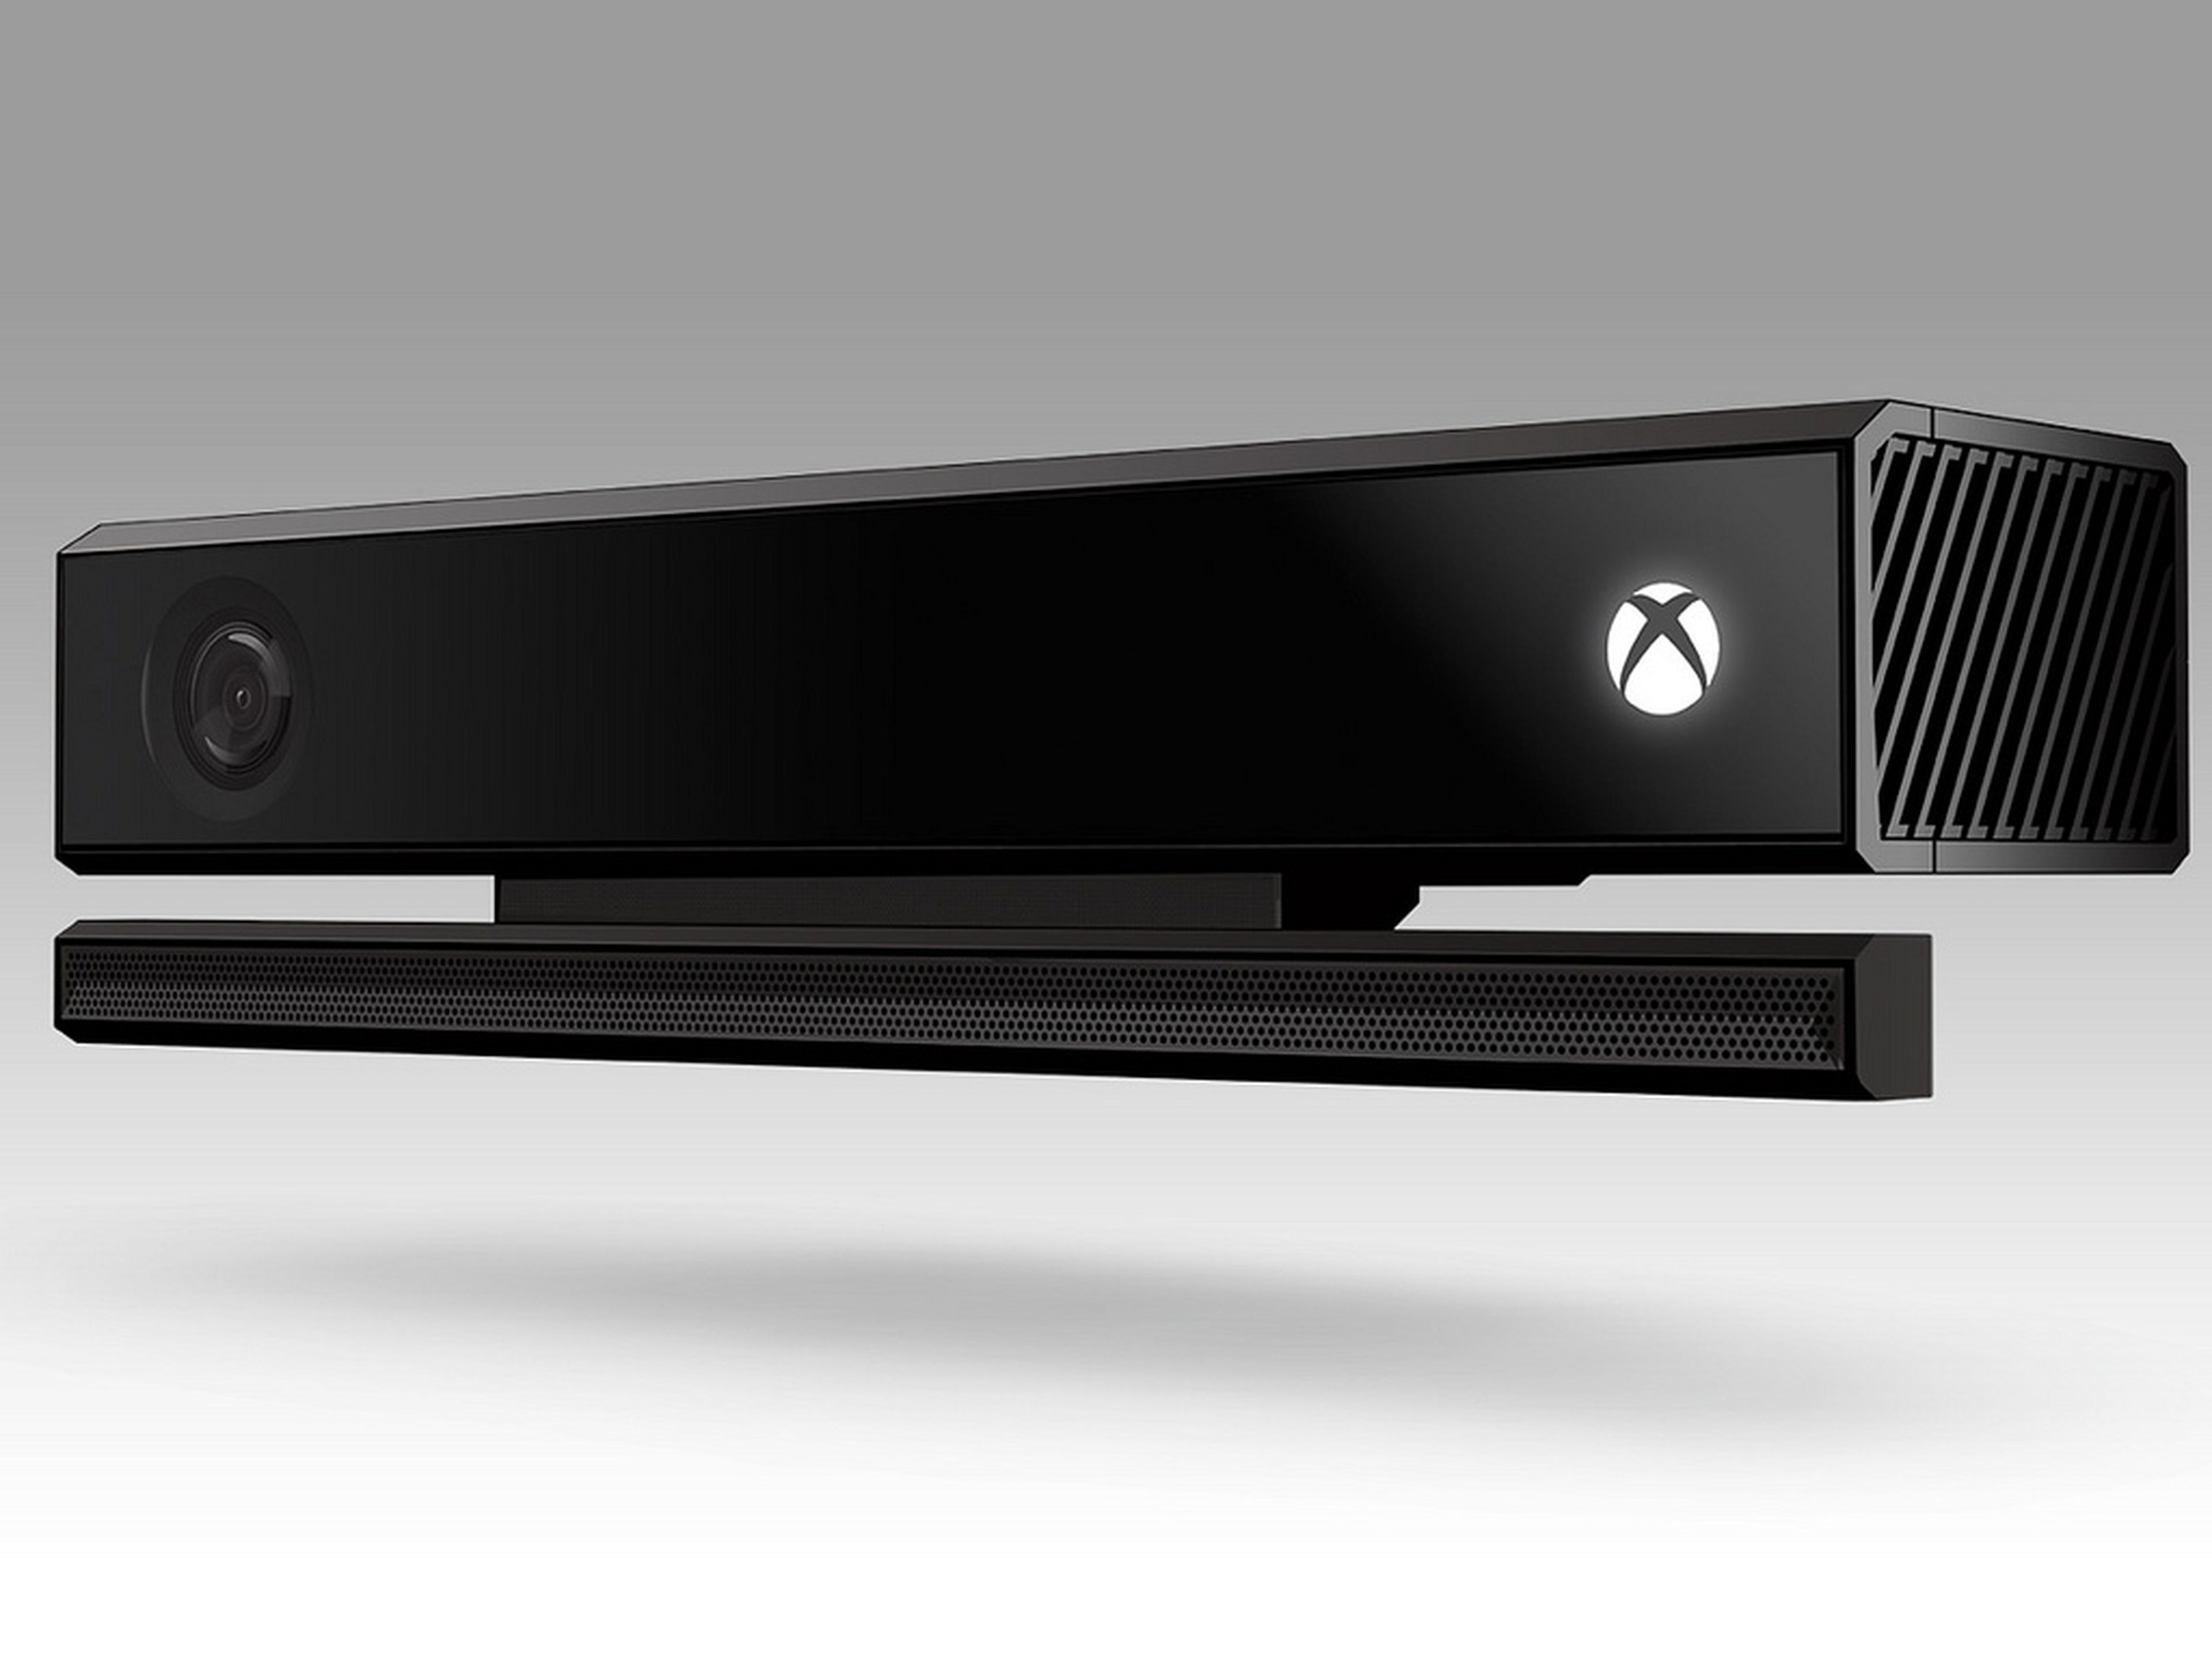 Xbox Kinect